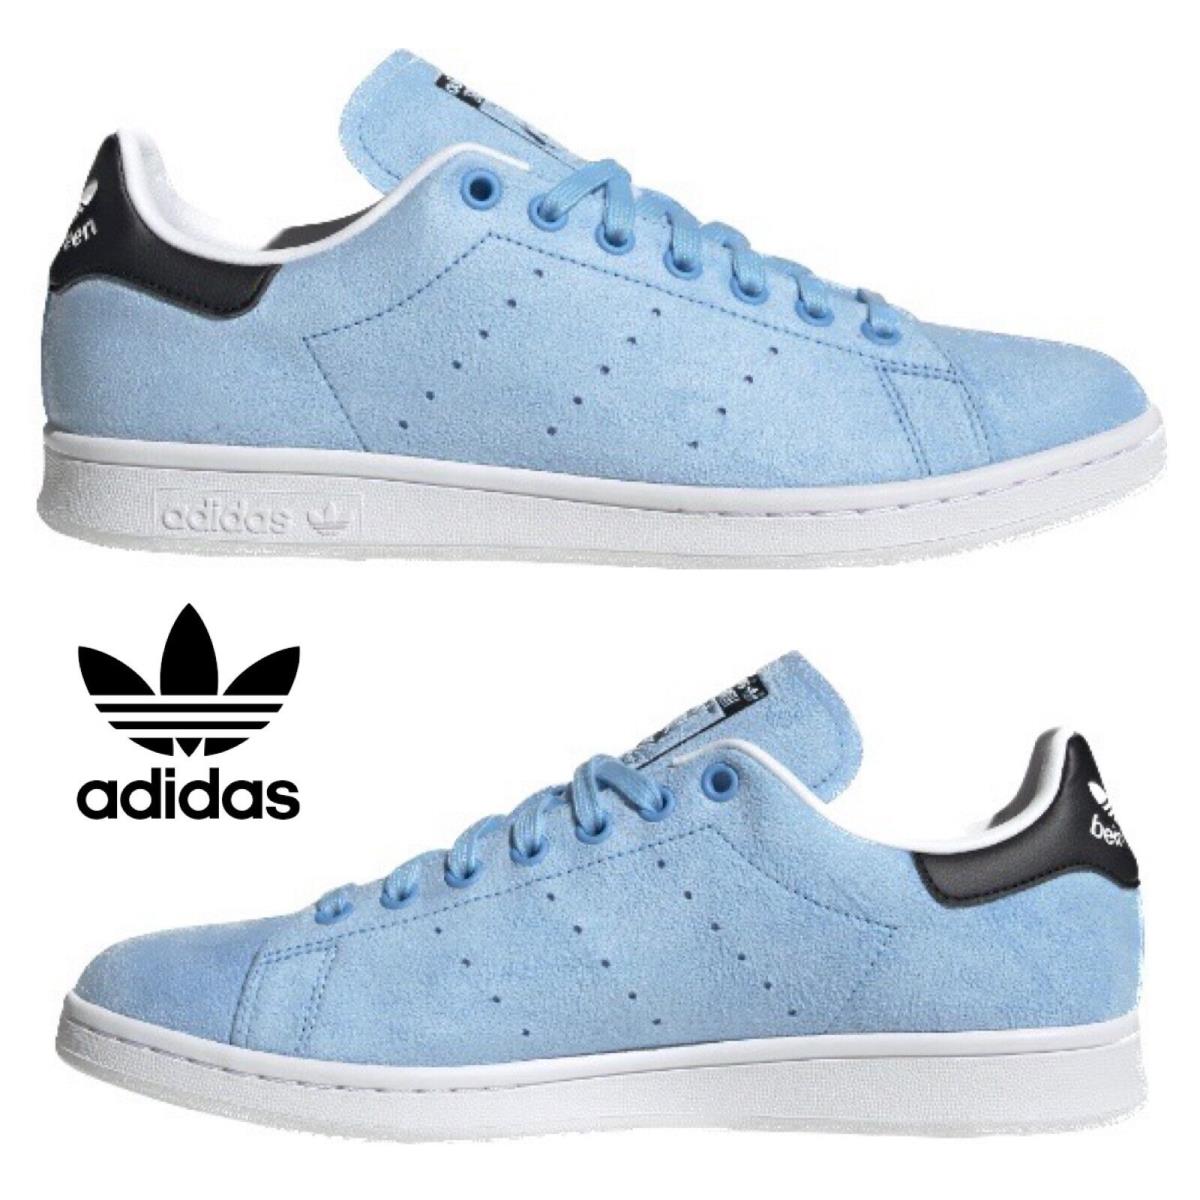 Adidas Originals Stan Smith Men`s Sneakers Comfort Sport Casual Shoes White Blue - Blue , Pantone/White/Black Manufacturer